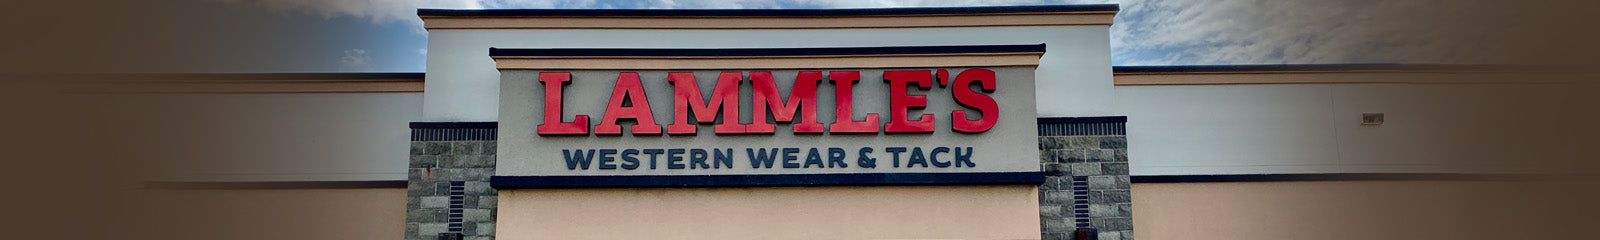 LAMMLE'S WESTERN WEAR & TACK - CLOSED - 9499 137 Avenue NW